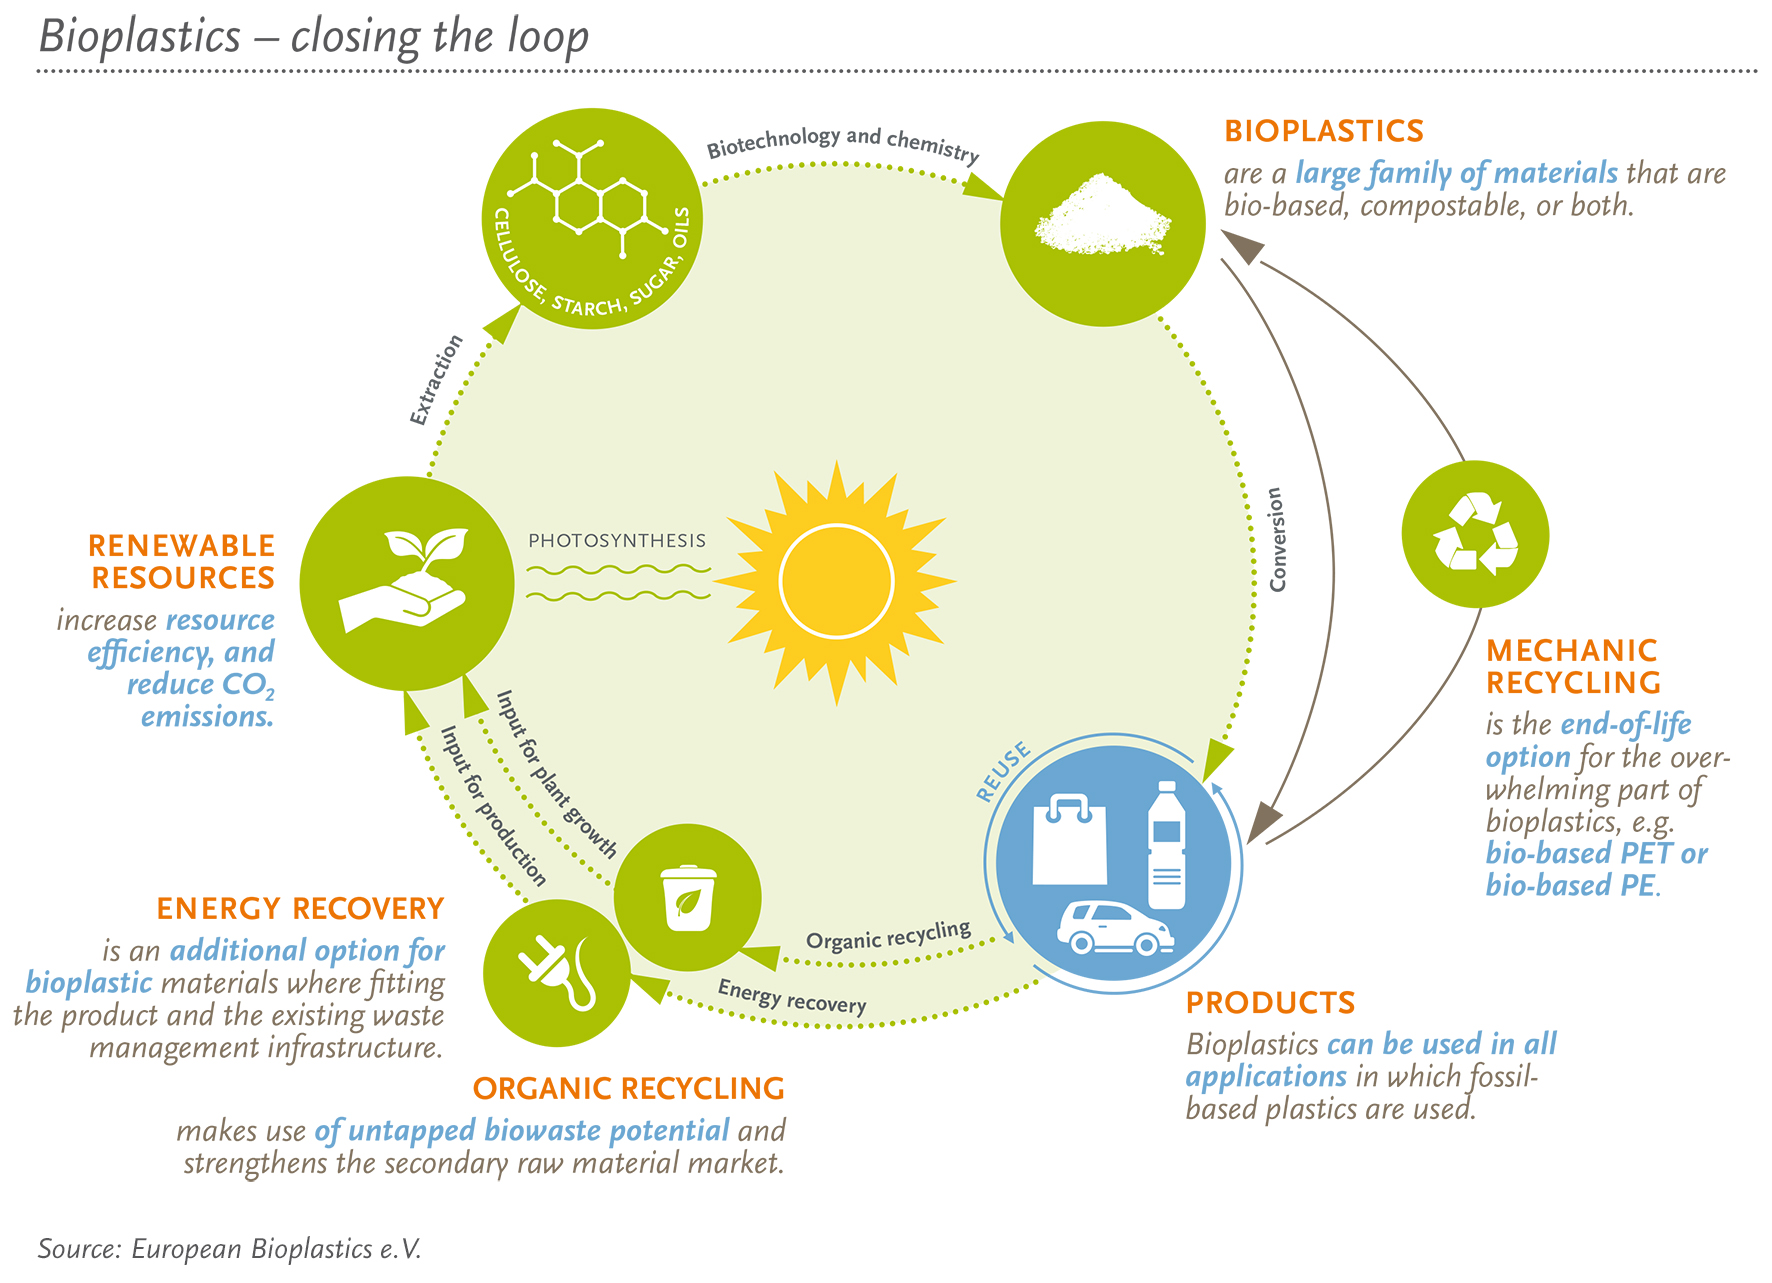 090616 EUBP_Bioplastics-closing_the_loop